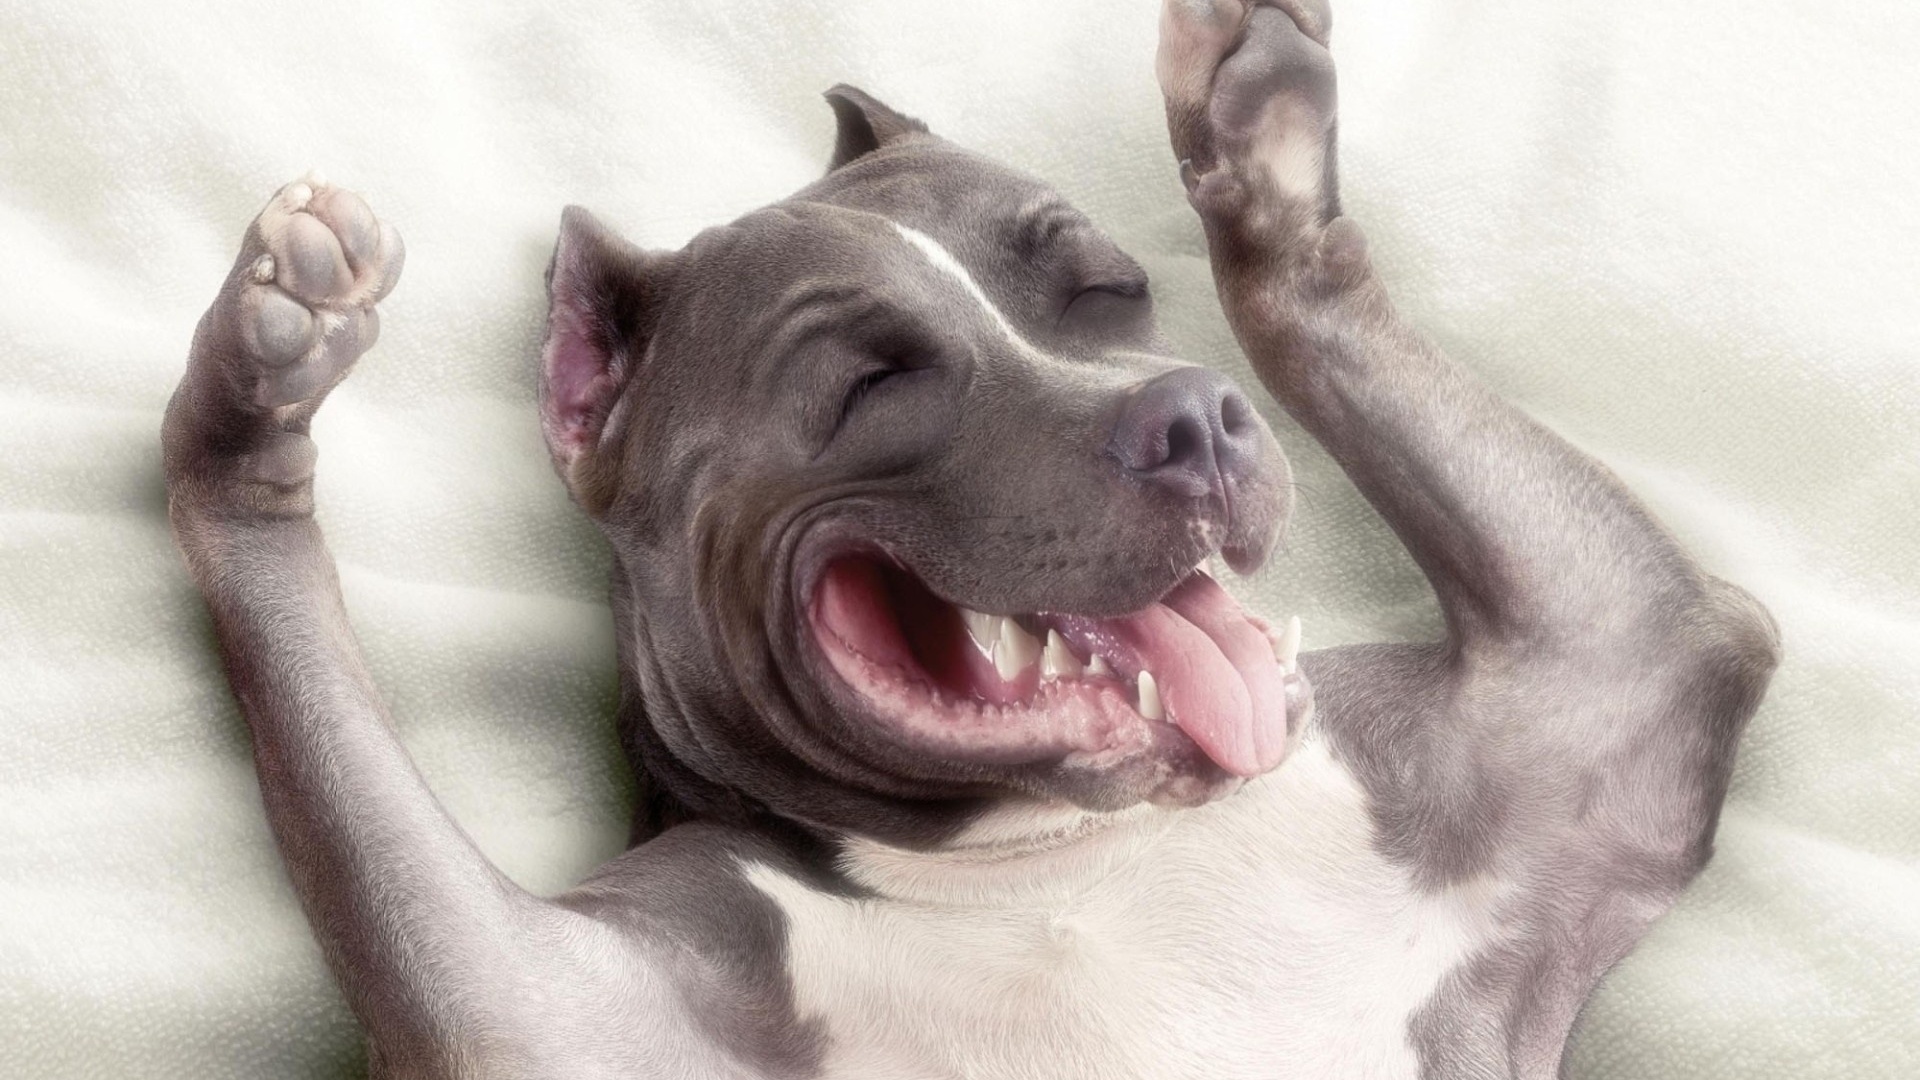 Sleeping Pitbull Dog HD Wallpaper New Fresh Image Of